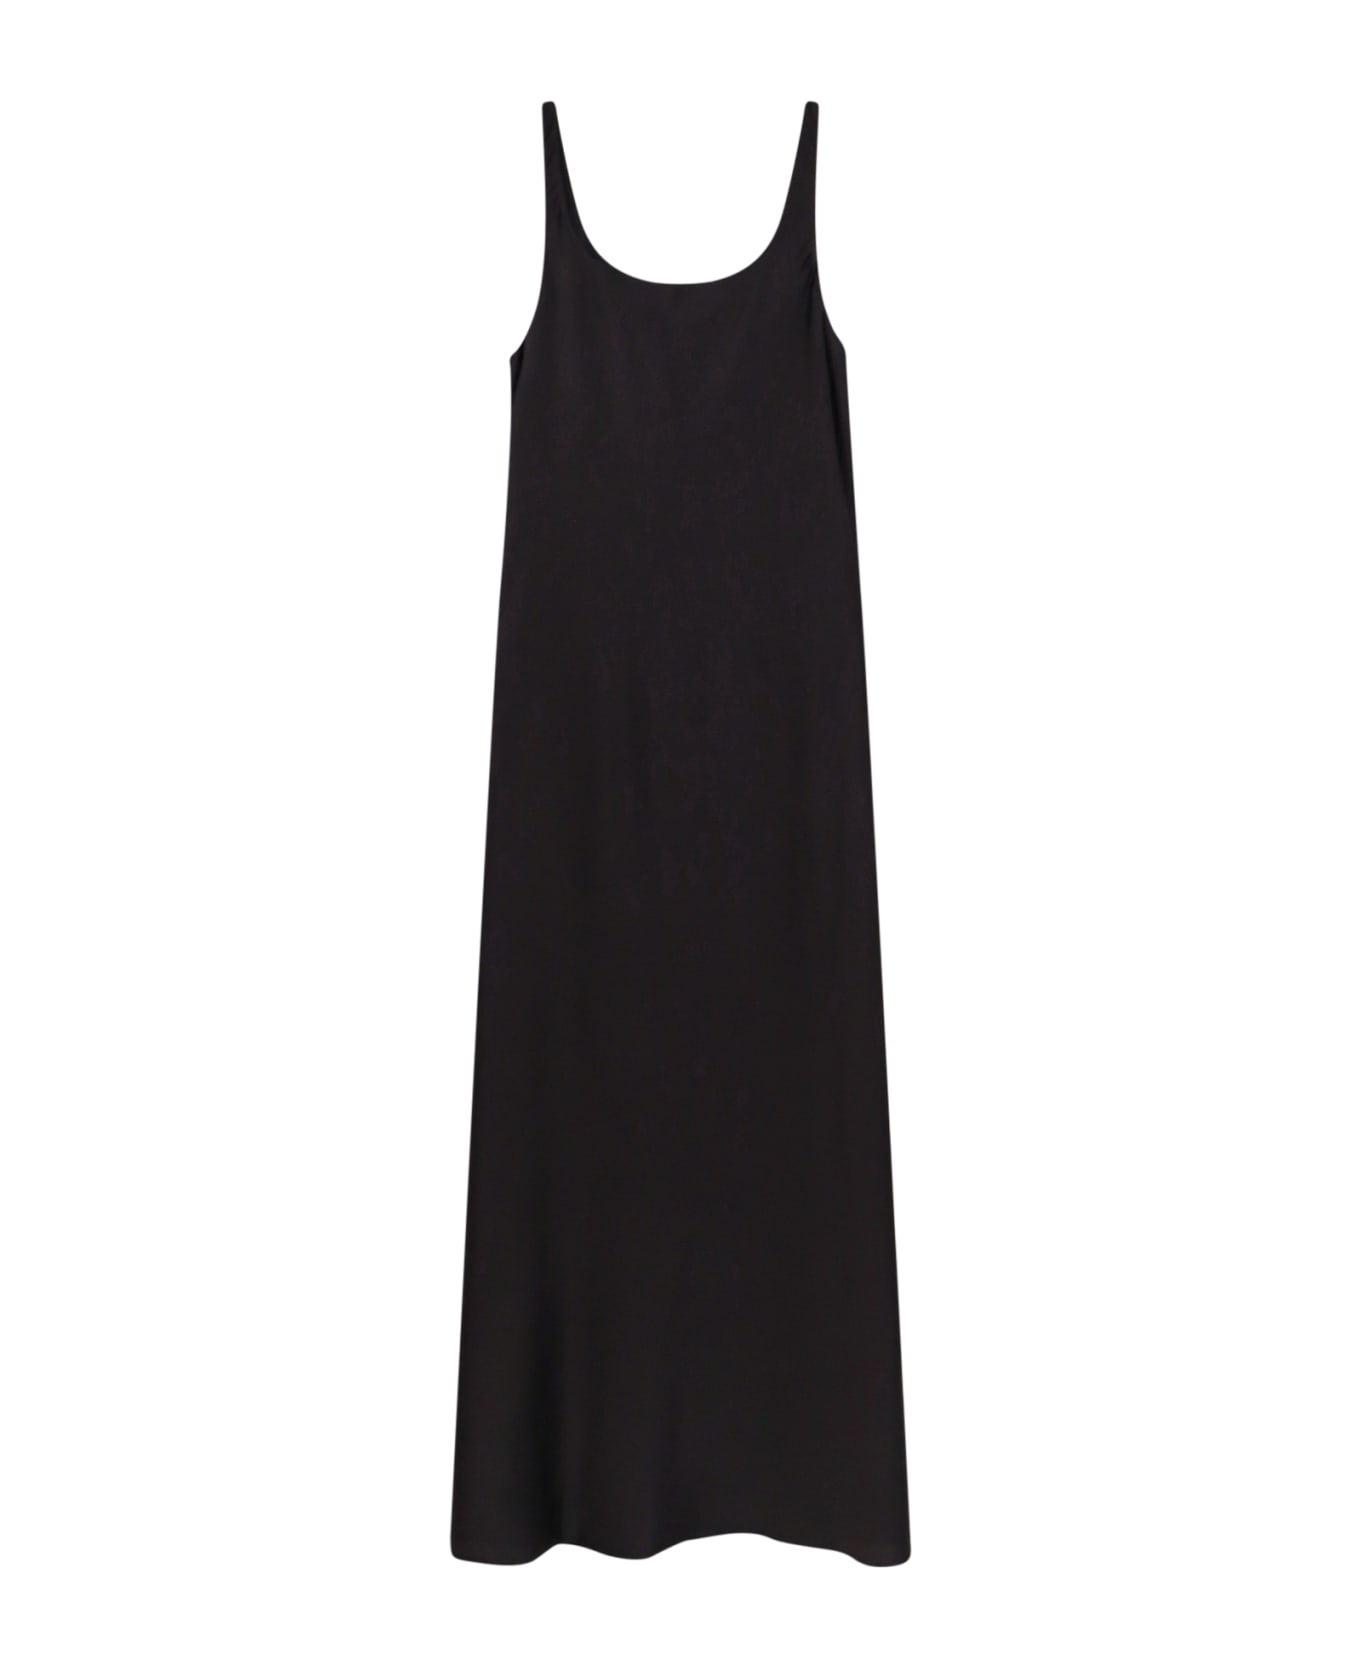 Le 17 Septembre Dress - Black ワンピース＆ドレス